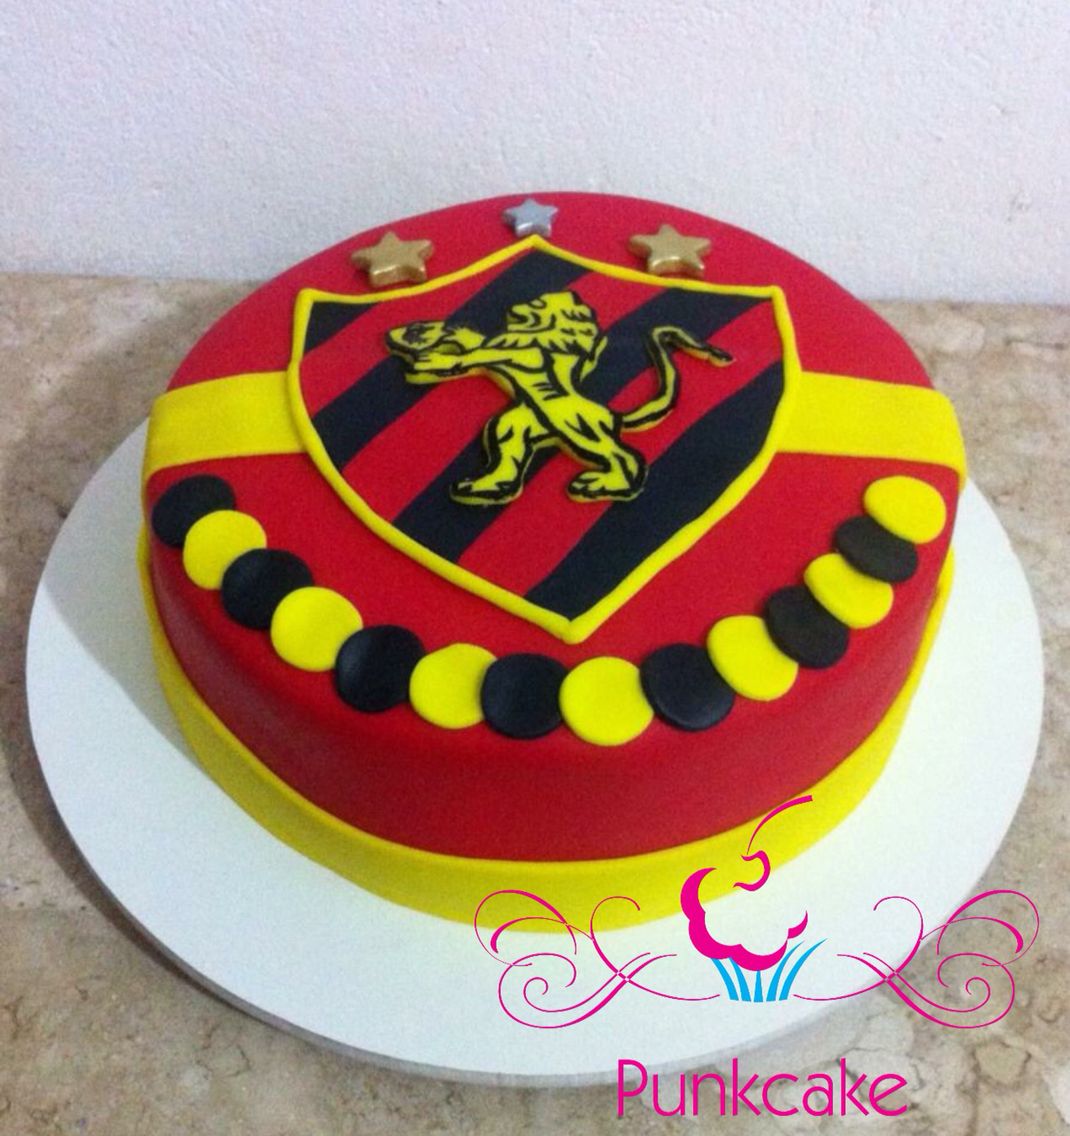 Decorated Cake Sport Club Recife